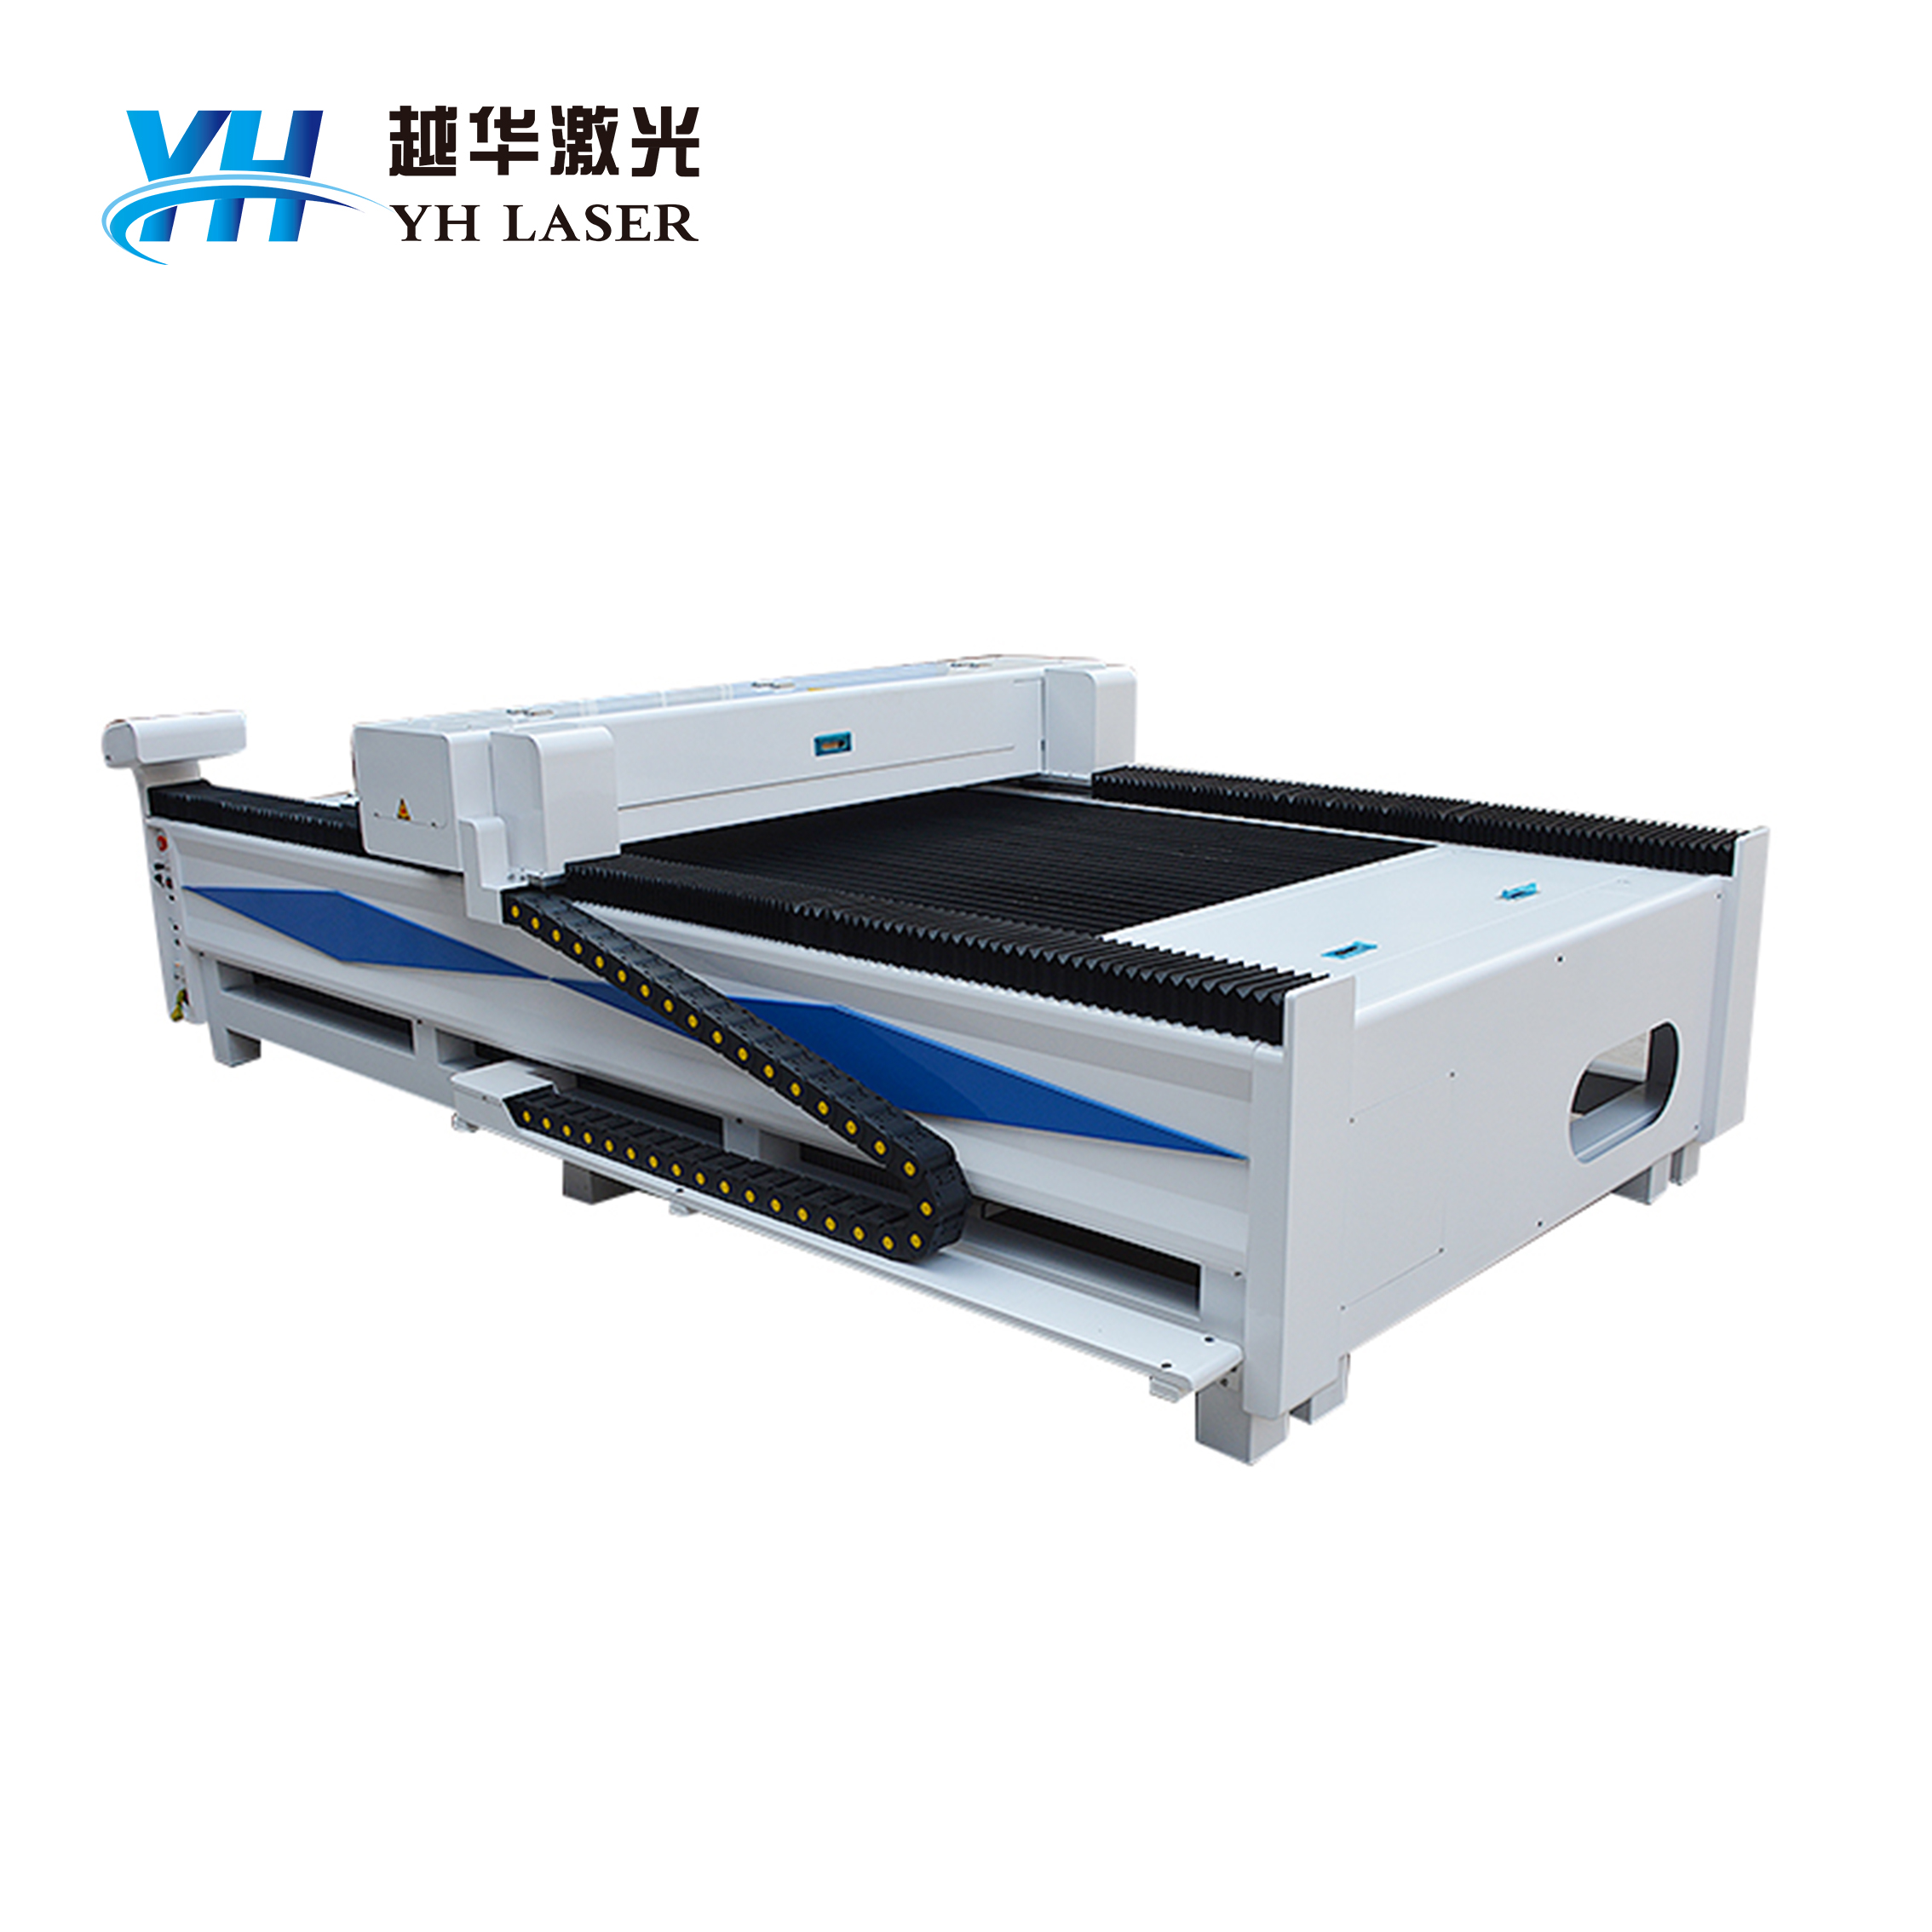 YH-1325 Large Area Laser Cutting Machine